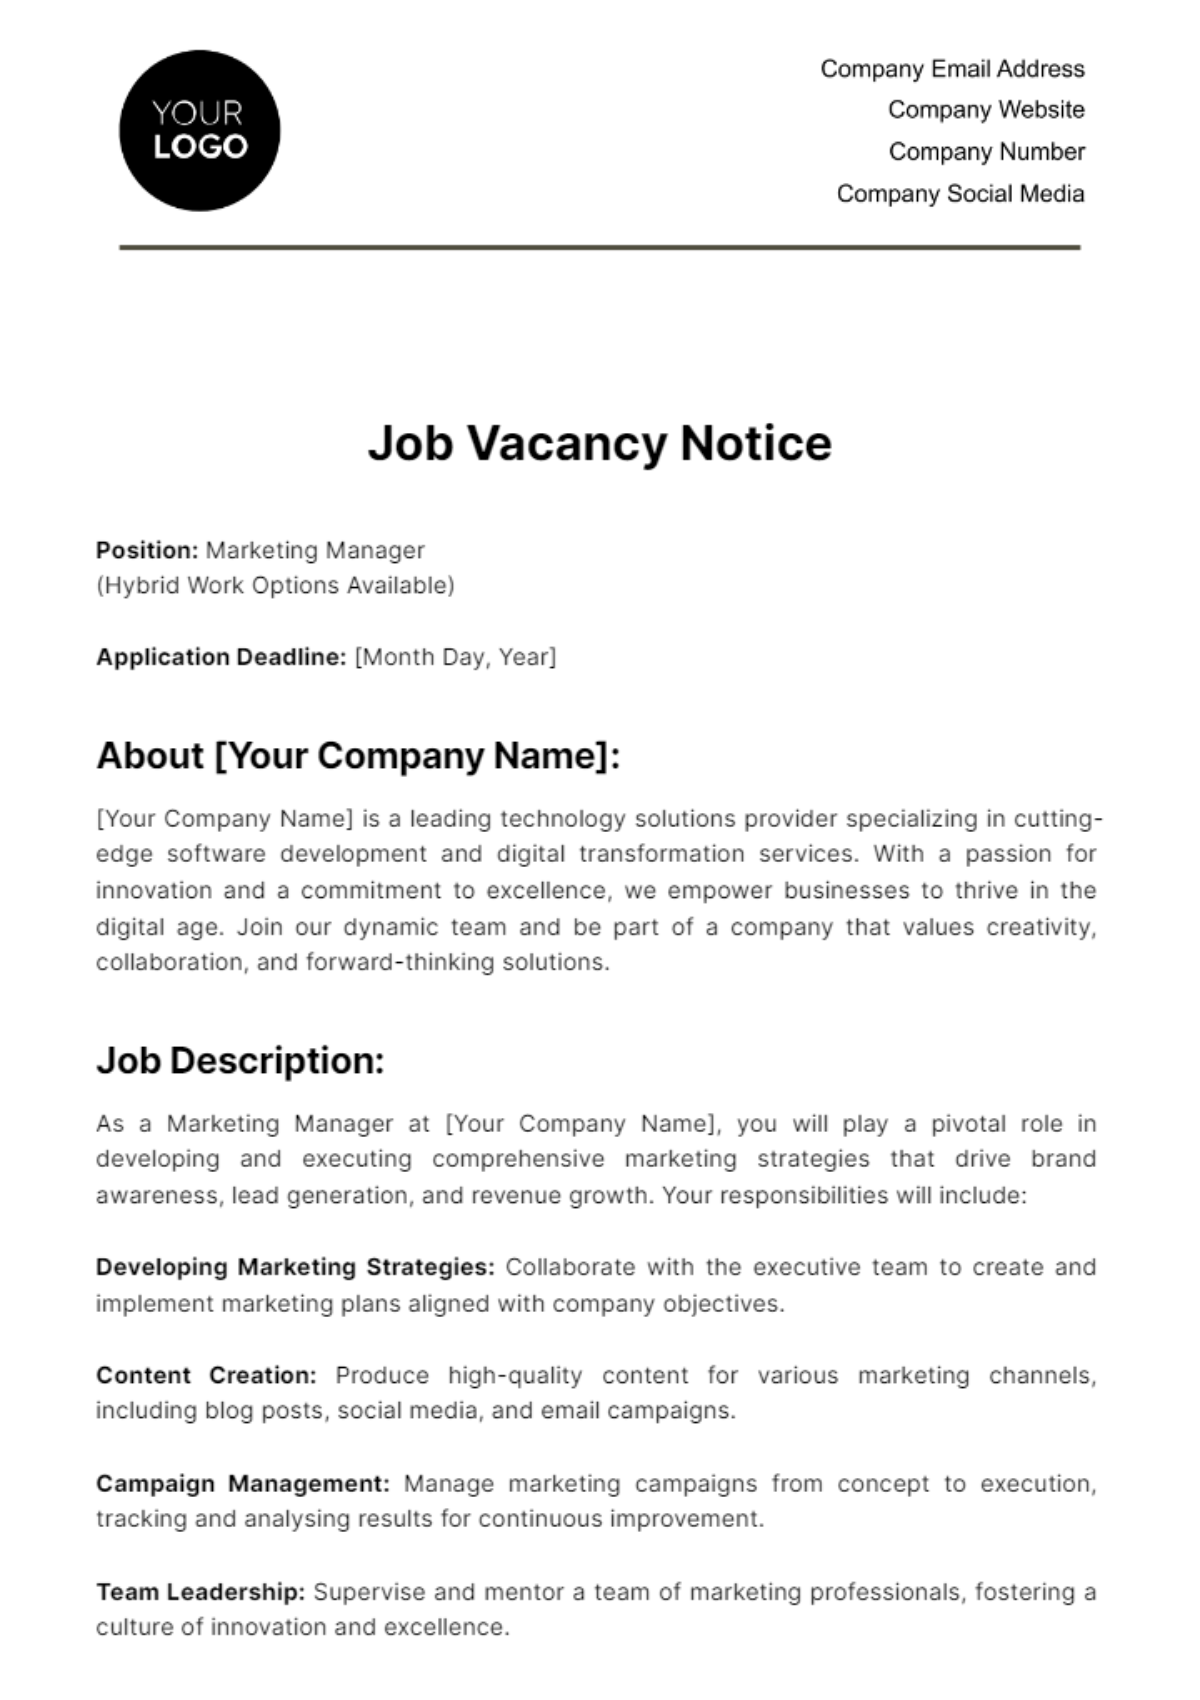 Job Vacancy Notice HR Template